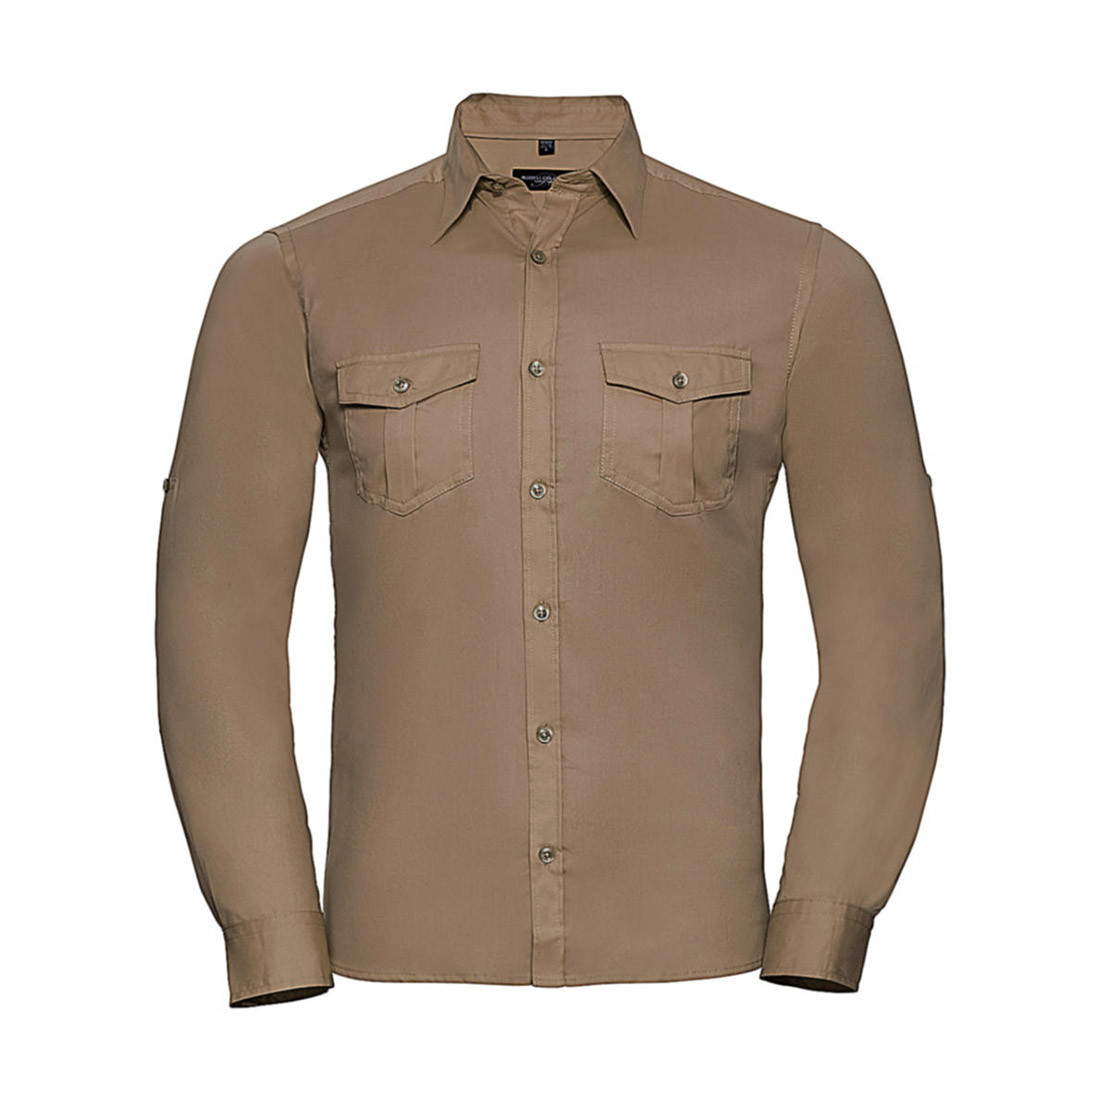 Roll Sleeve Shirt Long Sleeve - Les vêtements de protection